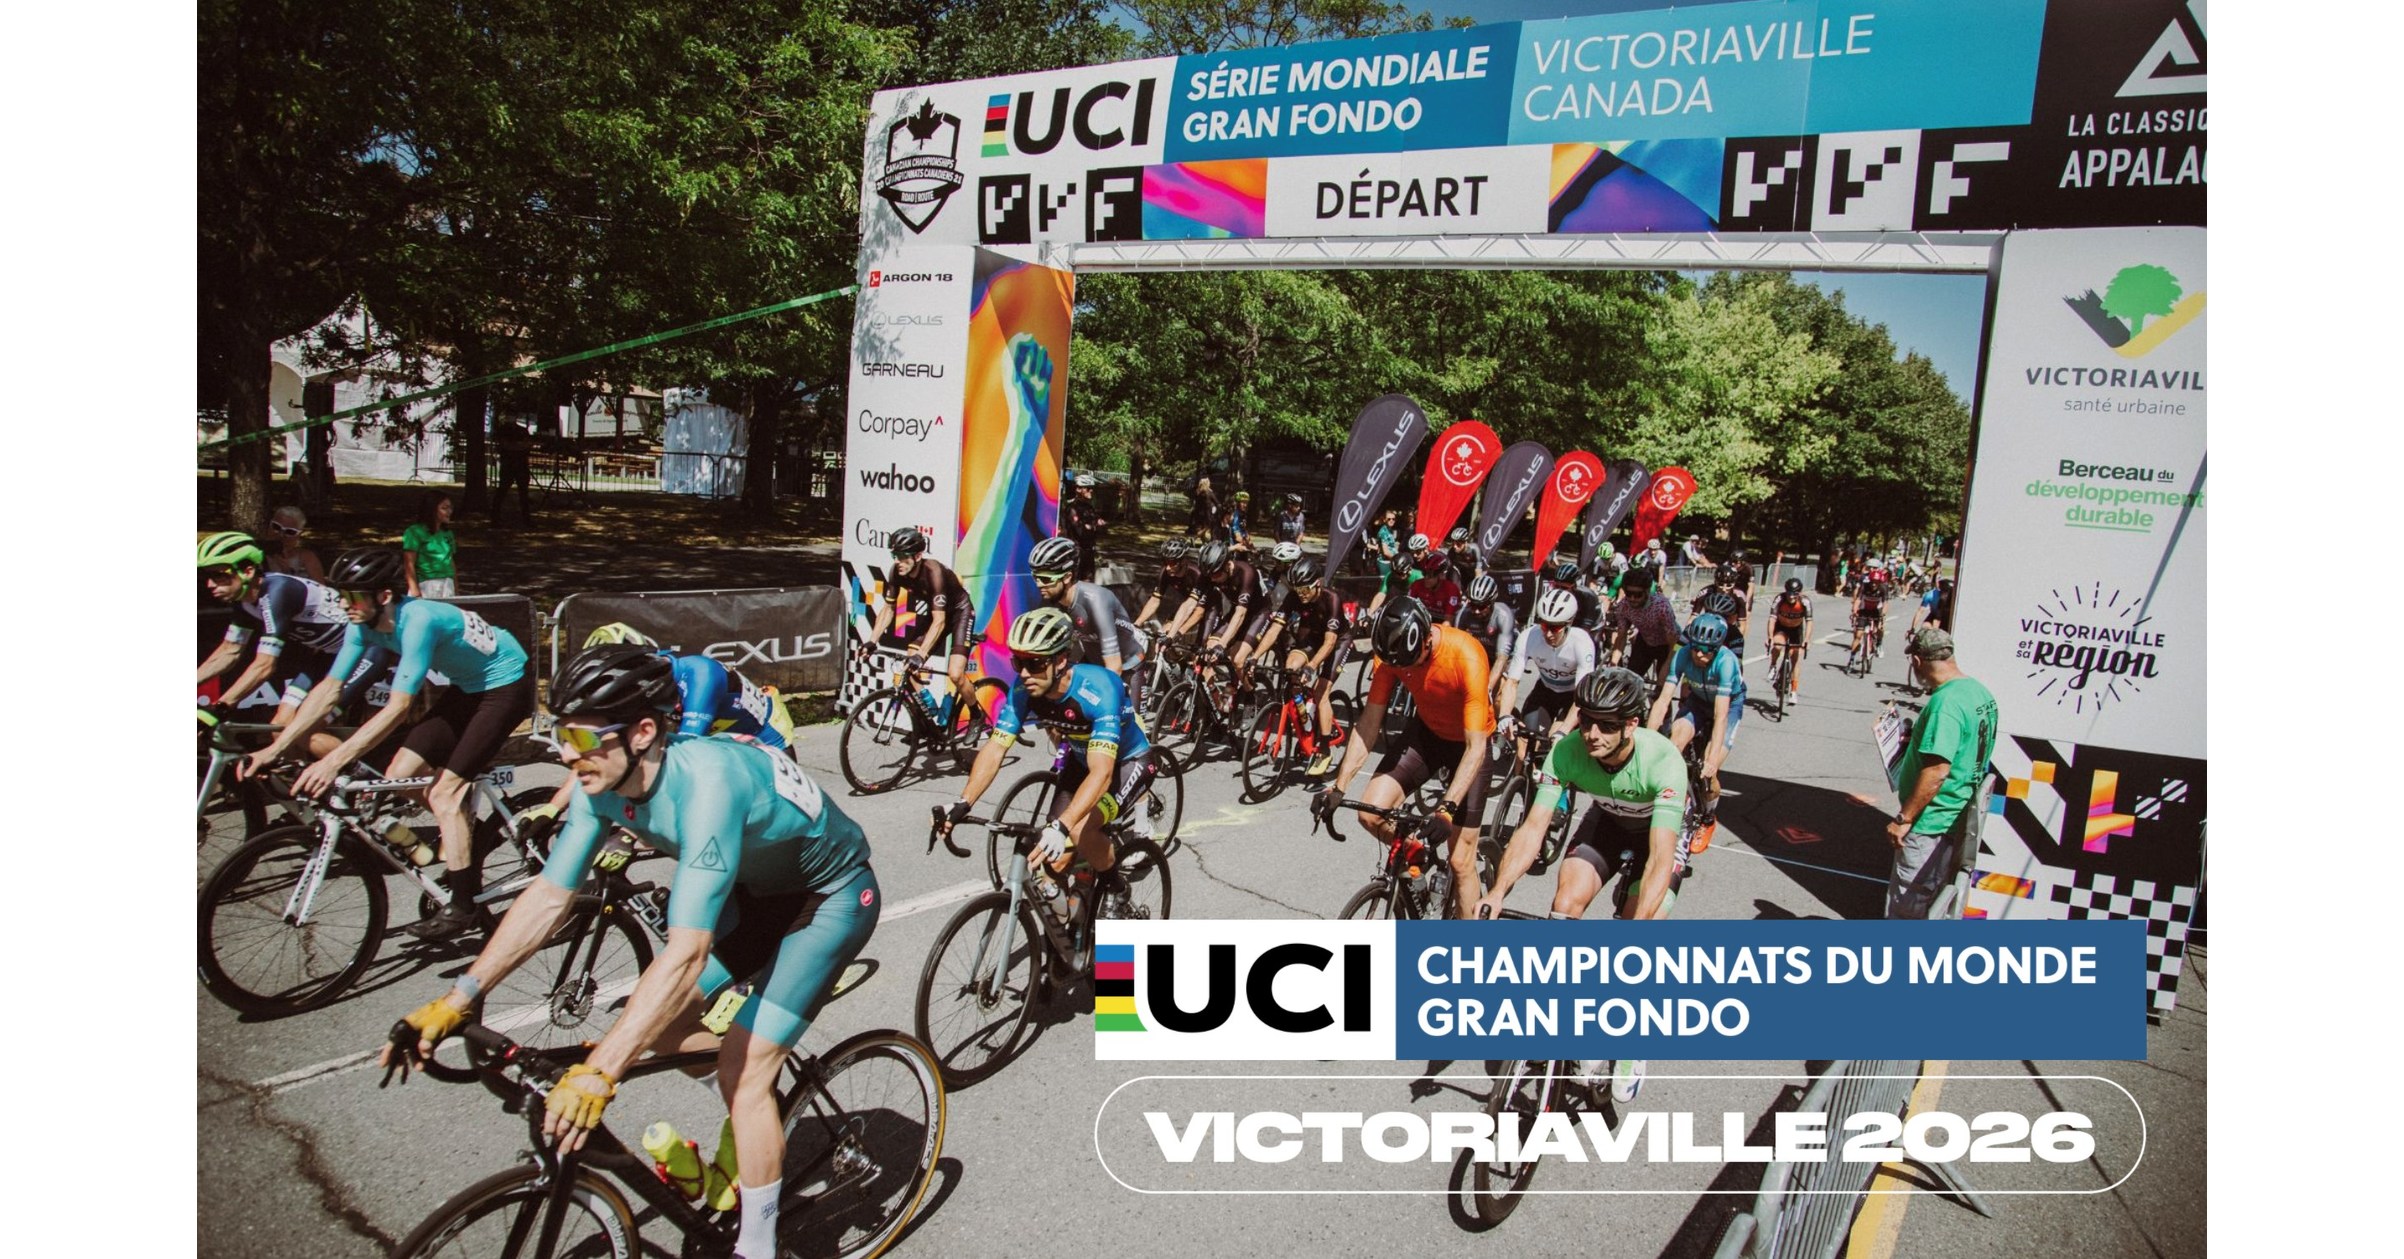 Victoriaville and its Region Will Host the 2026 UCI Gran Fondo World ...